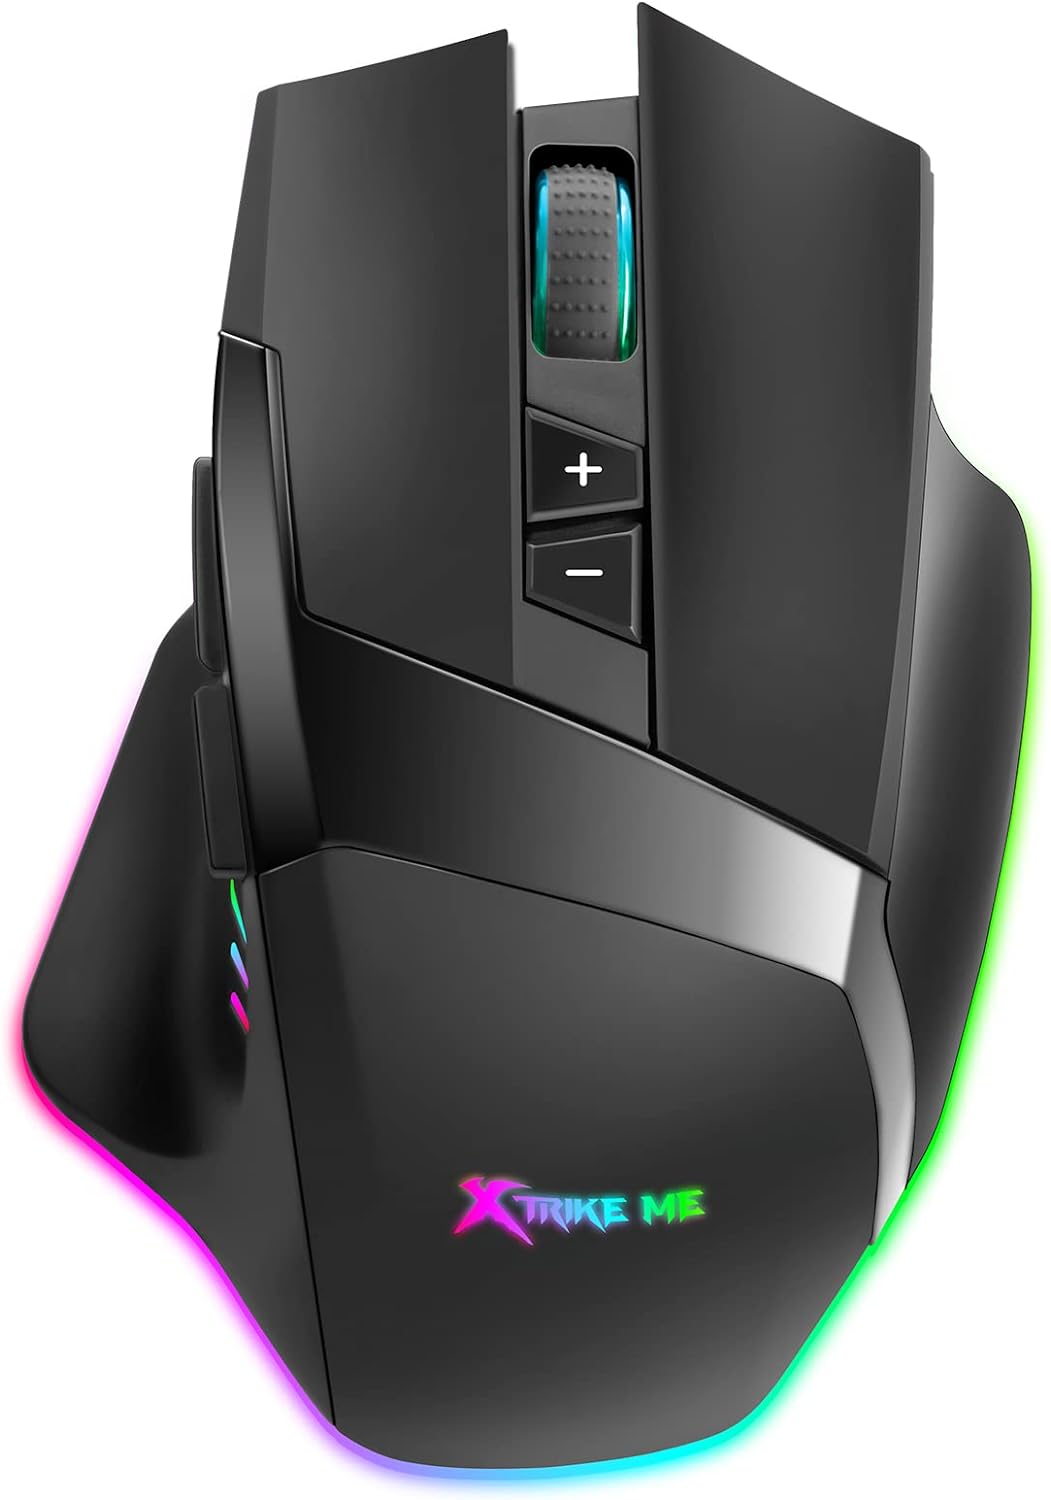 Xtrike Me Mk-900Kit bundle keyboard - mouse and mouse pad Gaming Combo